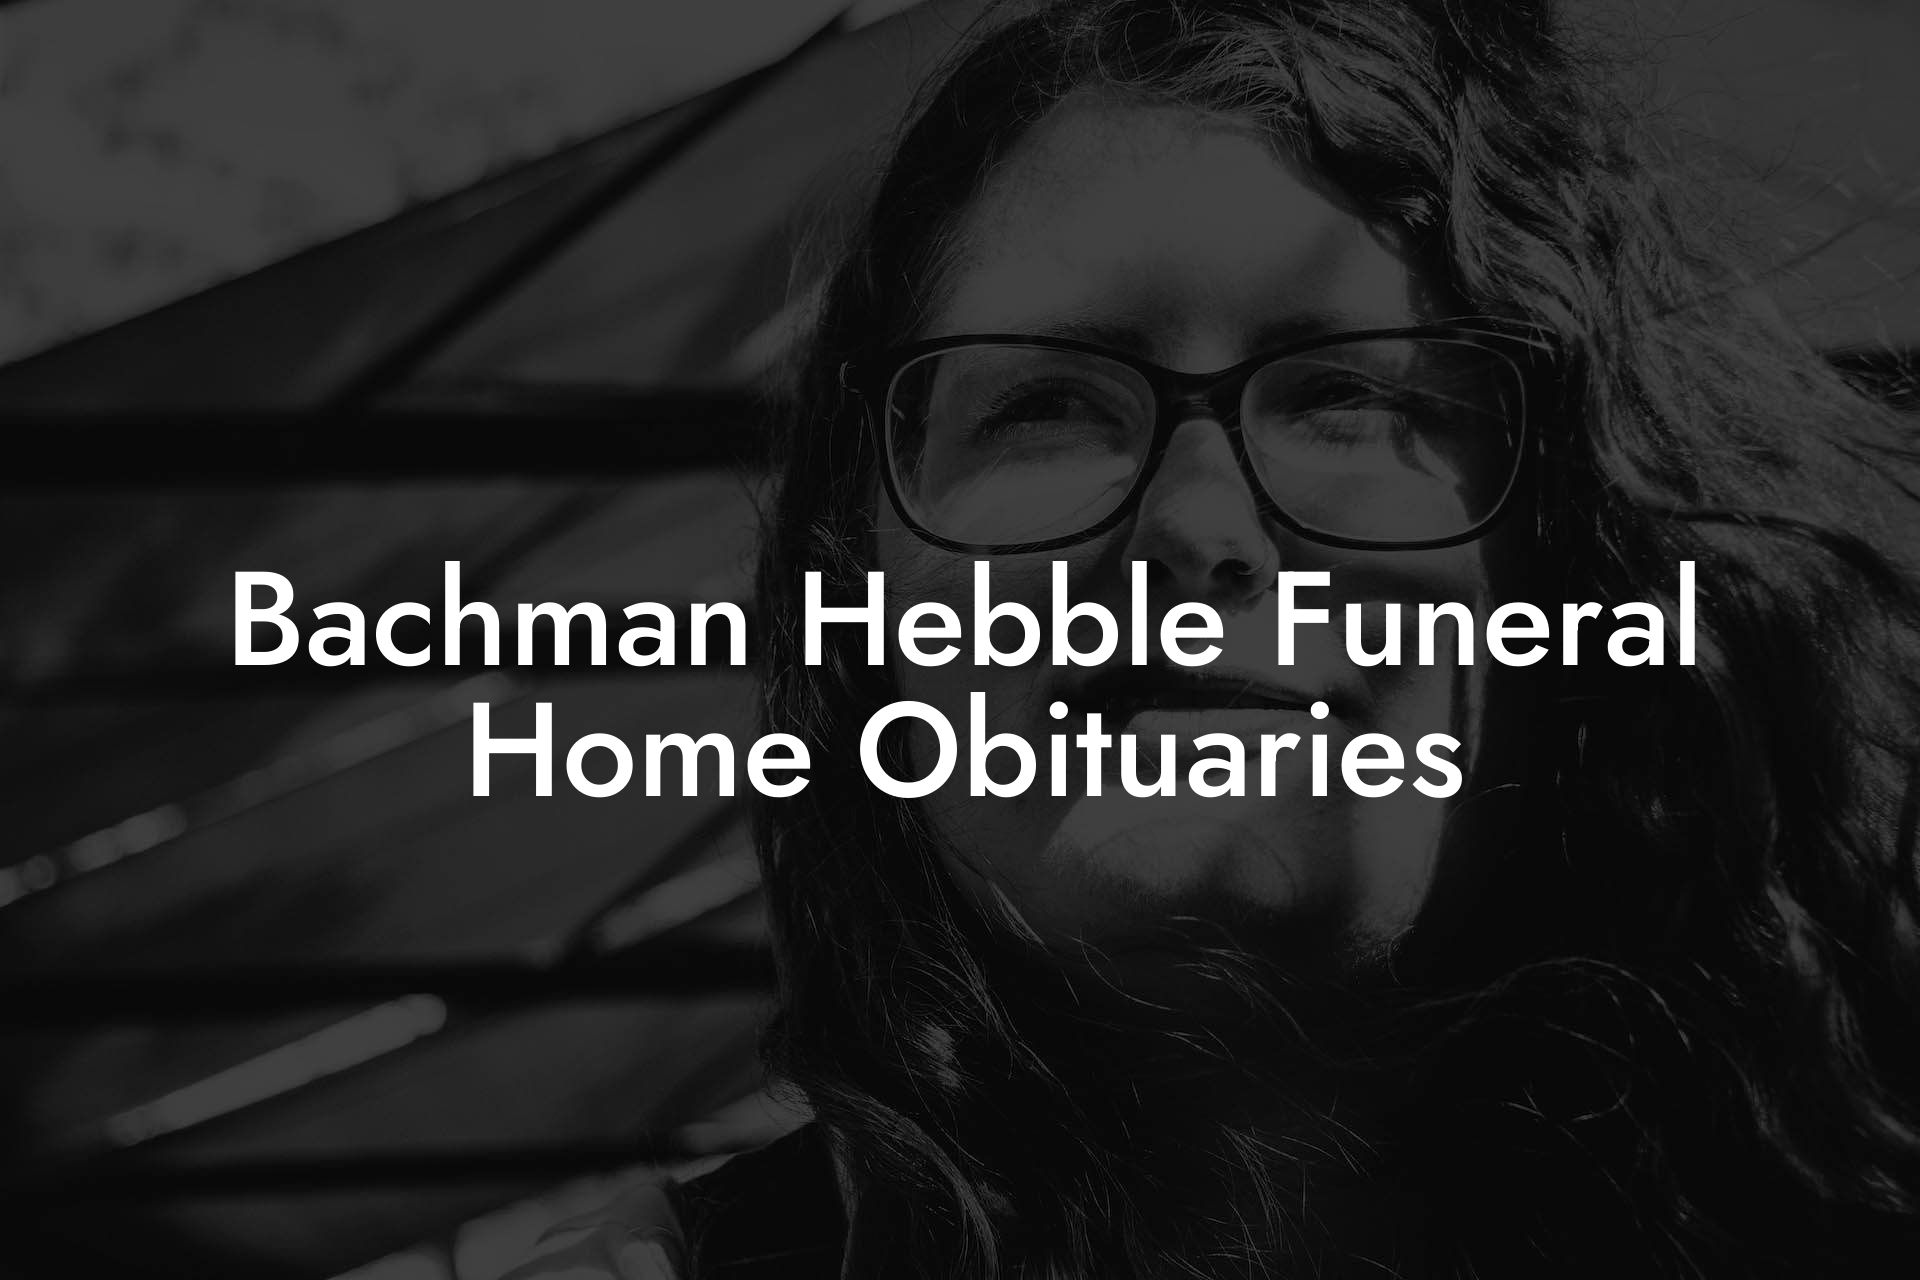 Bachman Hebble Funeral Home Obituaries